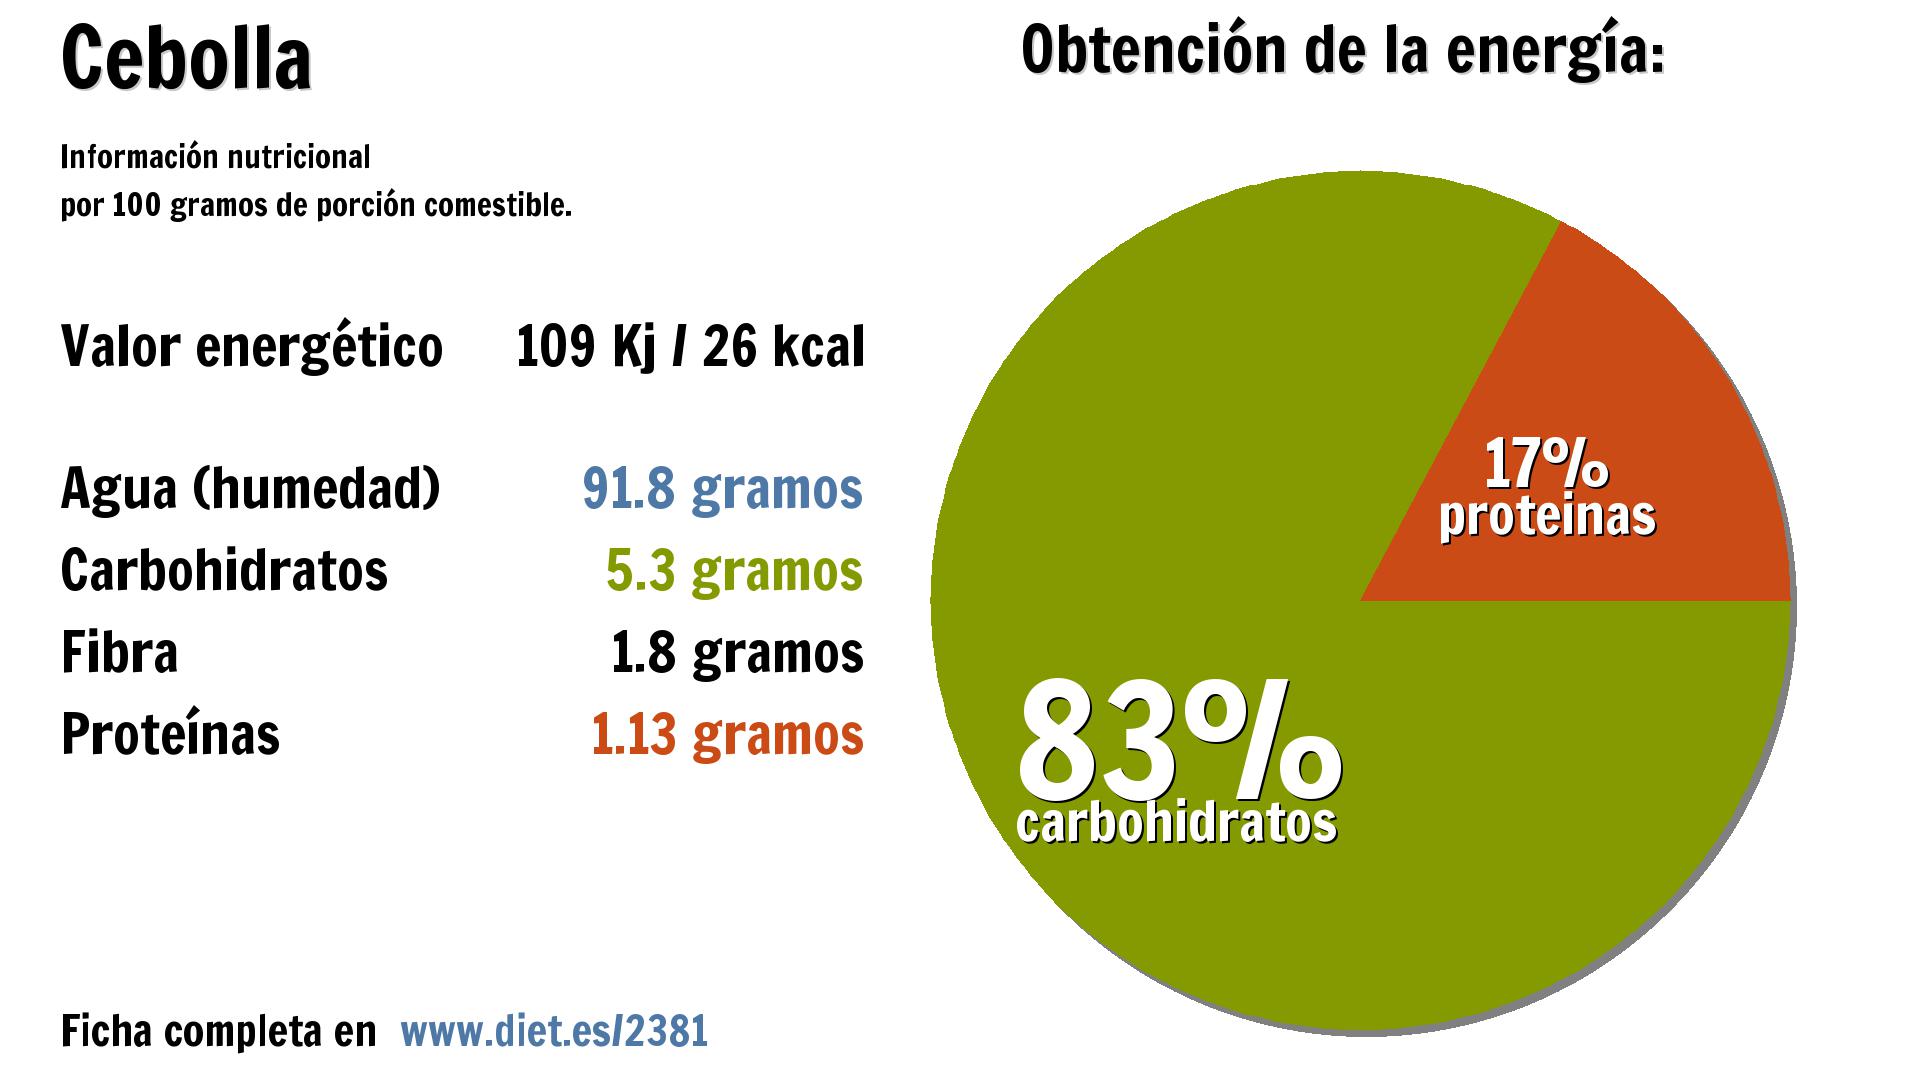 Cebolla: energía 109 Kj, agua 92 g., carbohidratos 5 g., fibra 2 g. y proteínas 1 g.